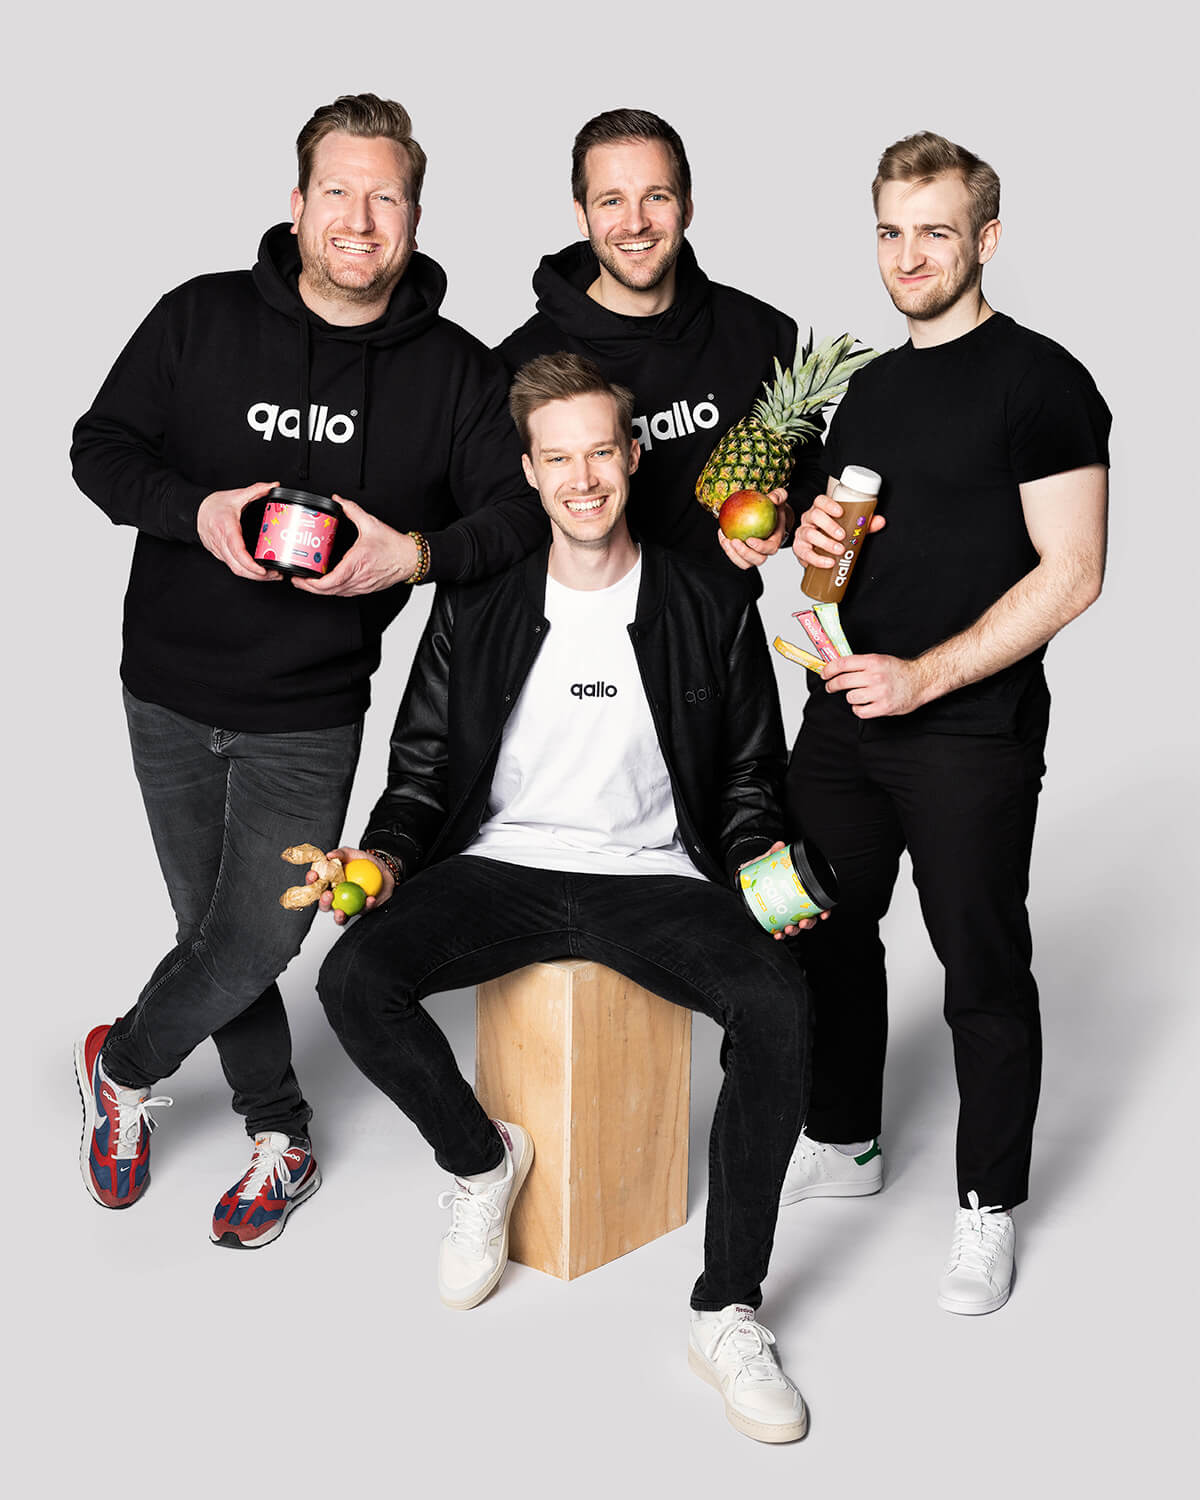 The Qallo team - Moos Tits, Niels Peetermans, Alexander Van Laer & Ian Hesbeens - holding the Qallo products.